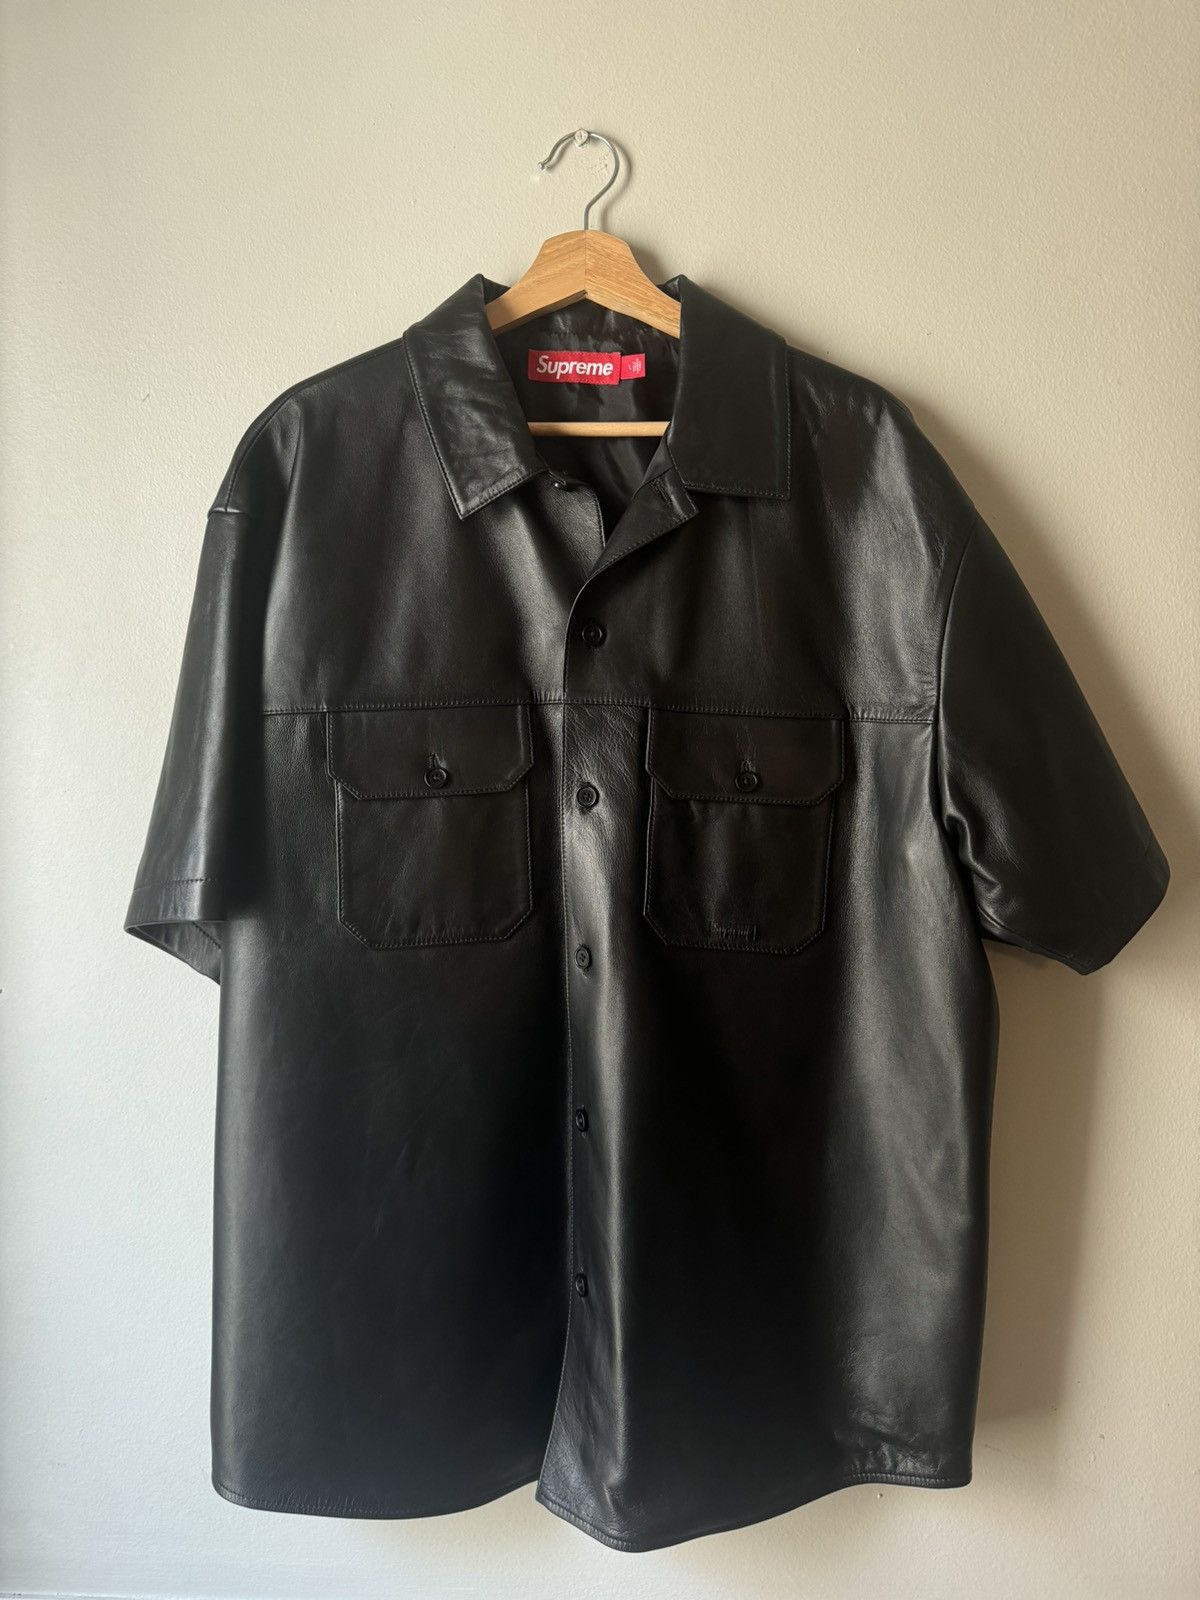 Supreme Supreme S/S Leather Work Shirt | Grailed